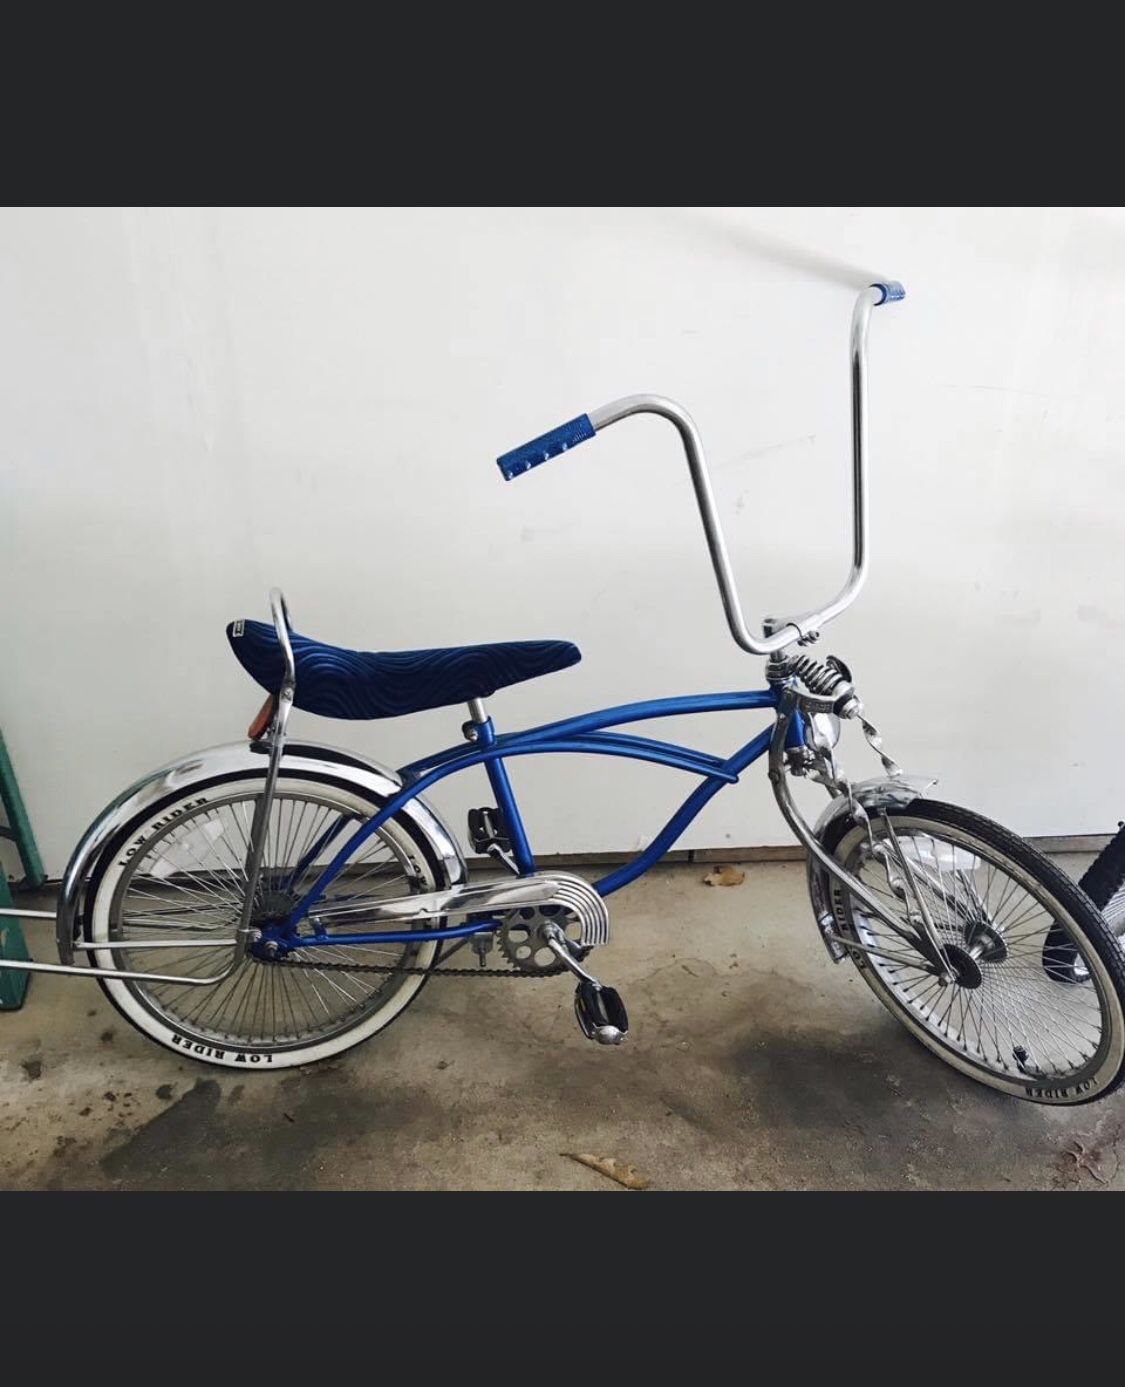 Lowrider bike